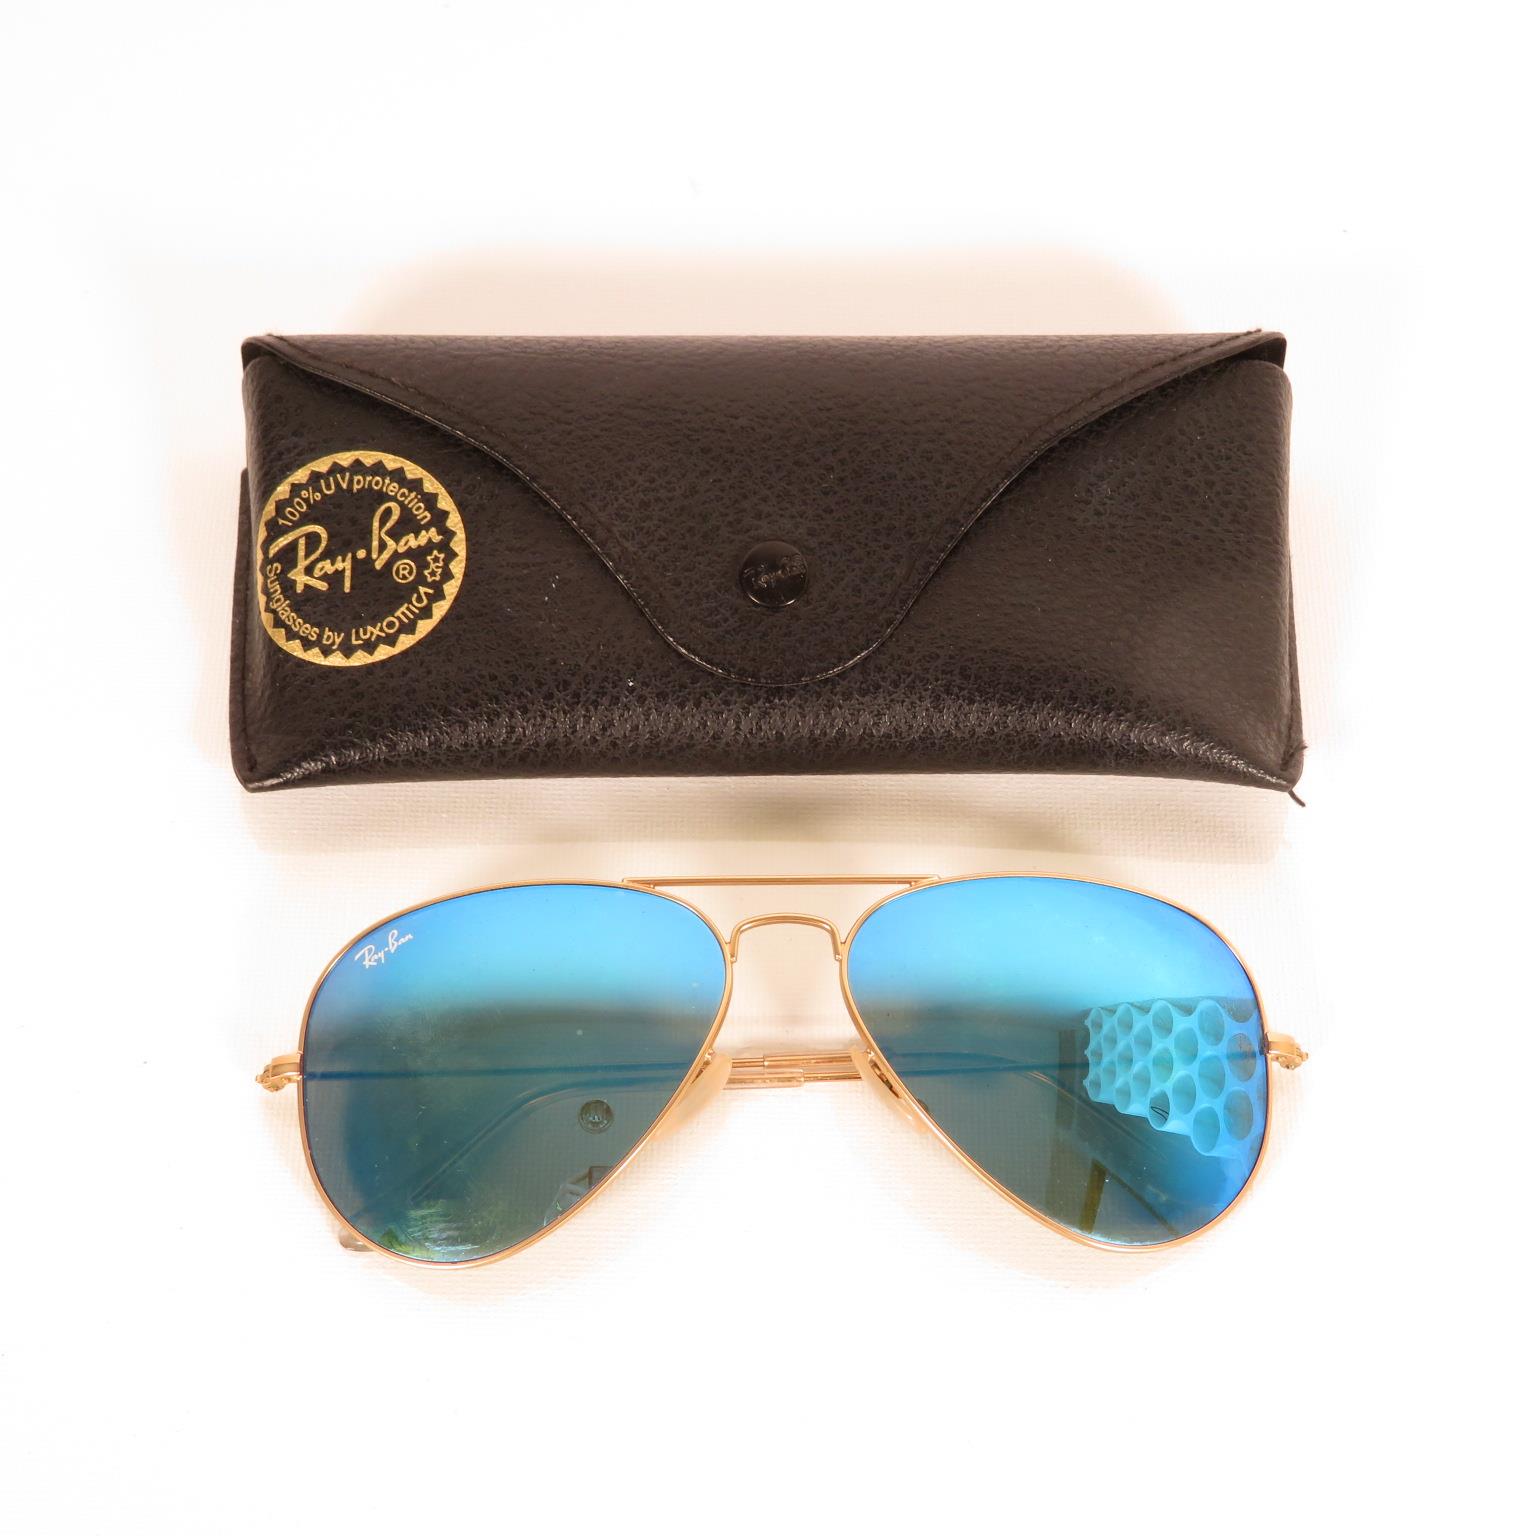 5x pairs Ray Ban sunglasses - - Image 15 of 23